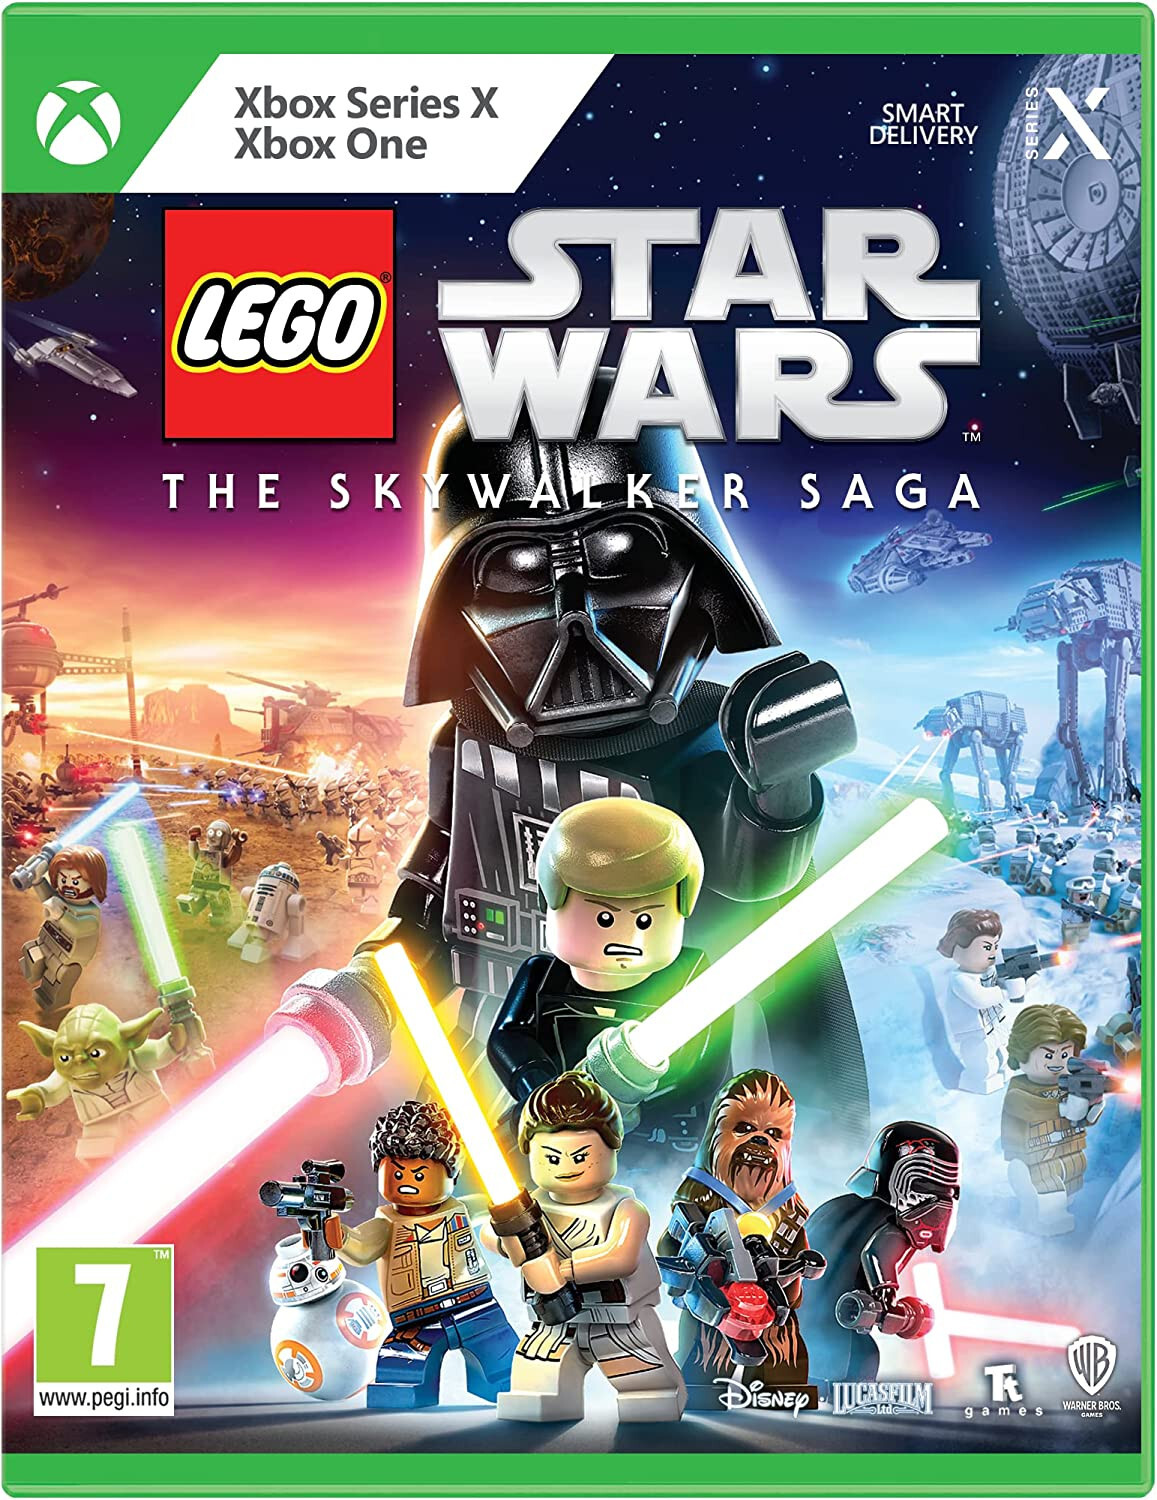 Warner Bros. Interactive lego star wars the skywalker saga Xbox One